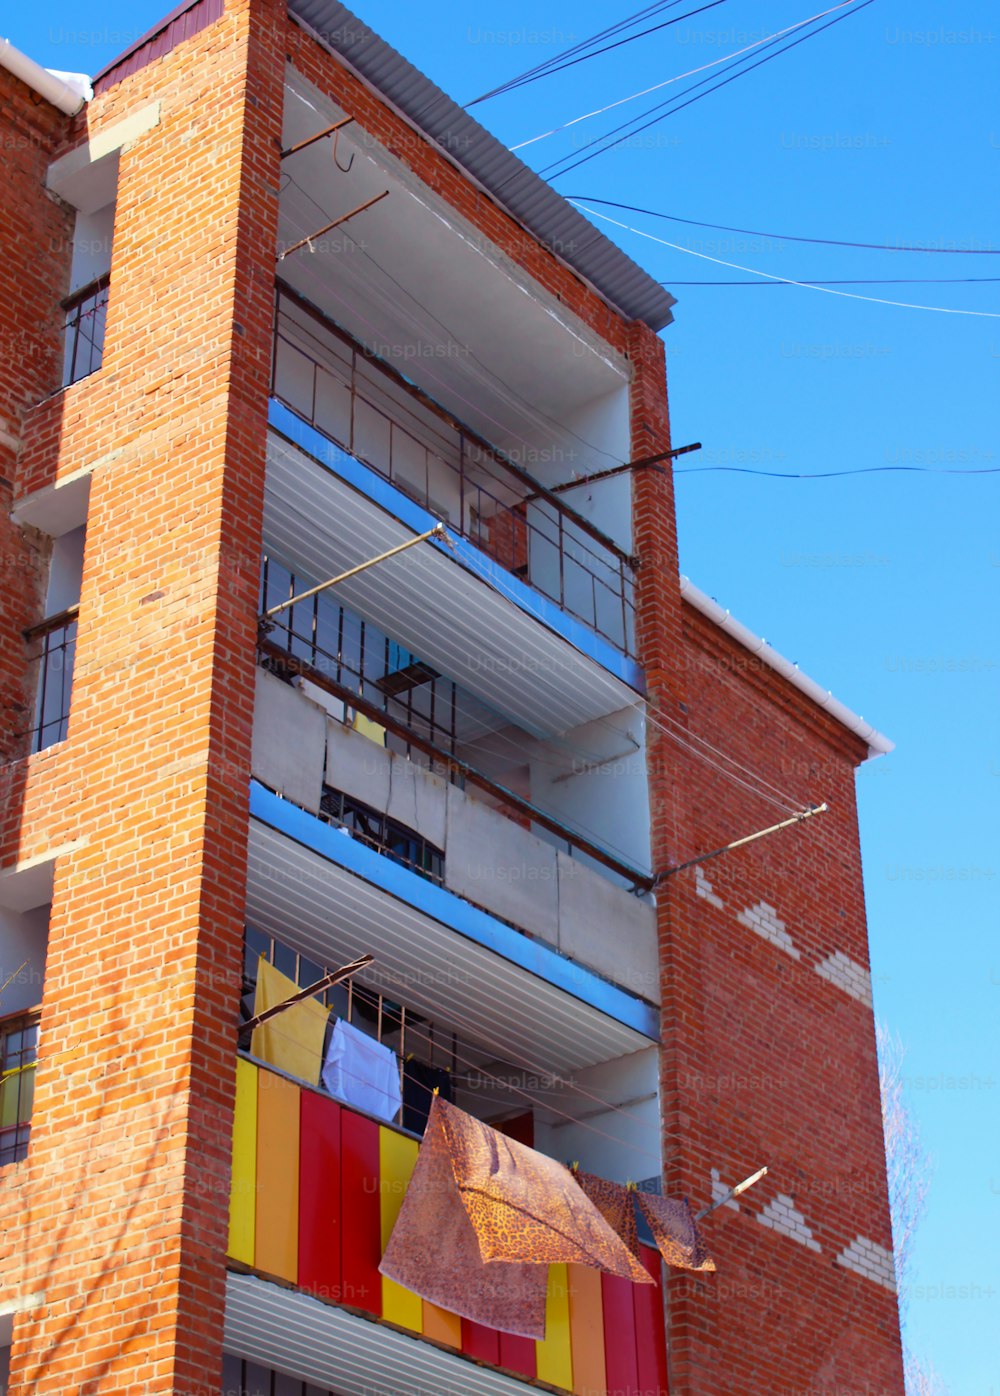 Un edificio alto de ladrillo con un balcón multicolor